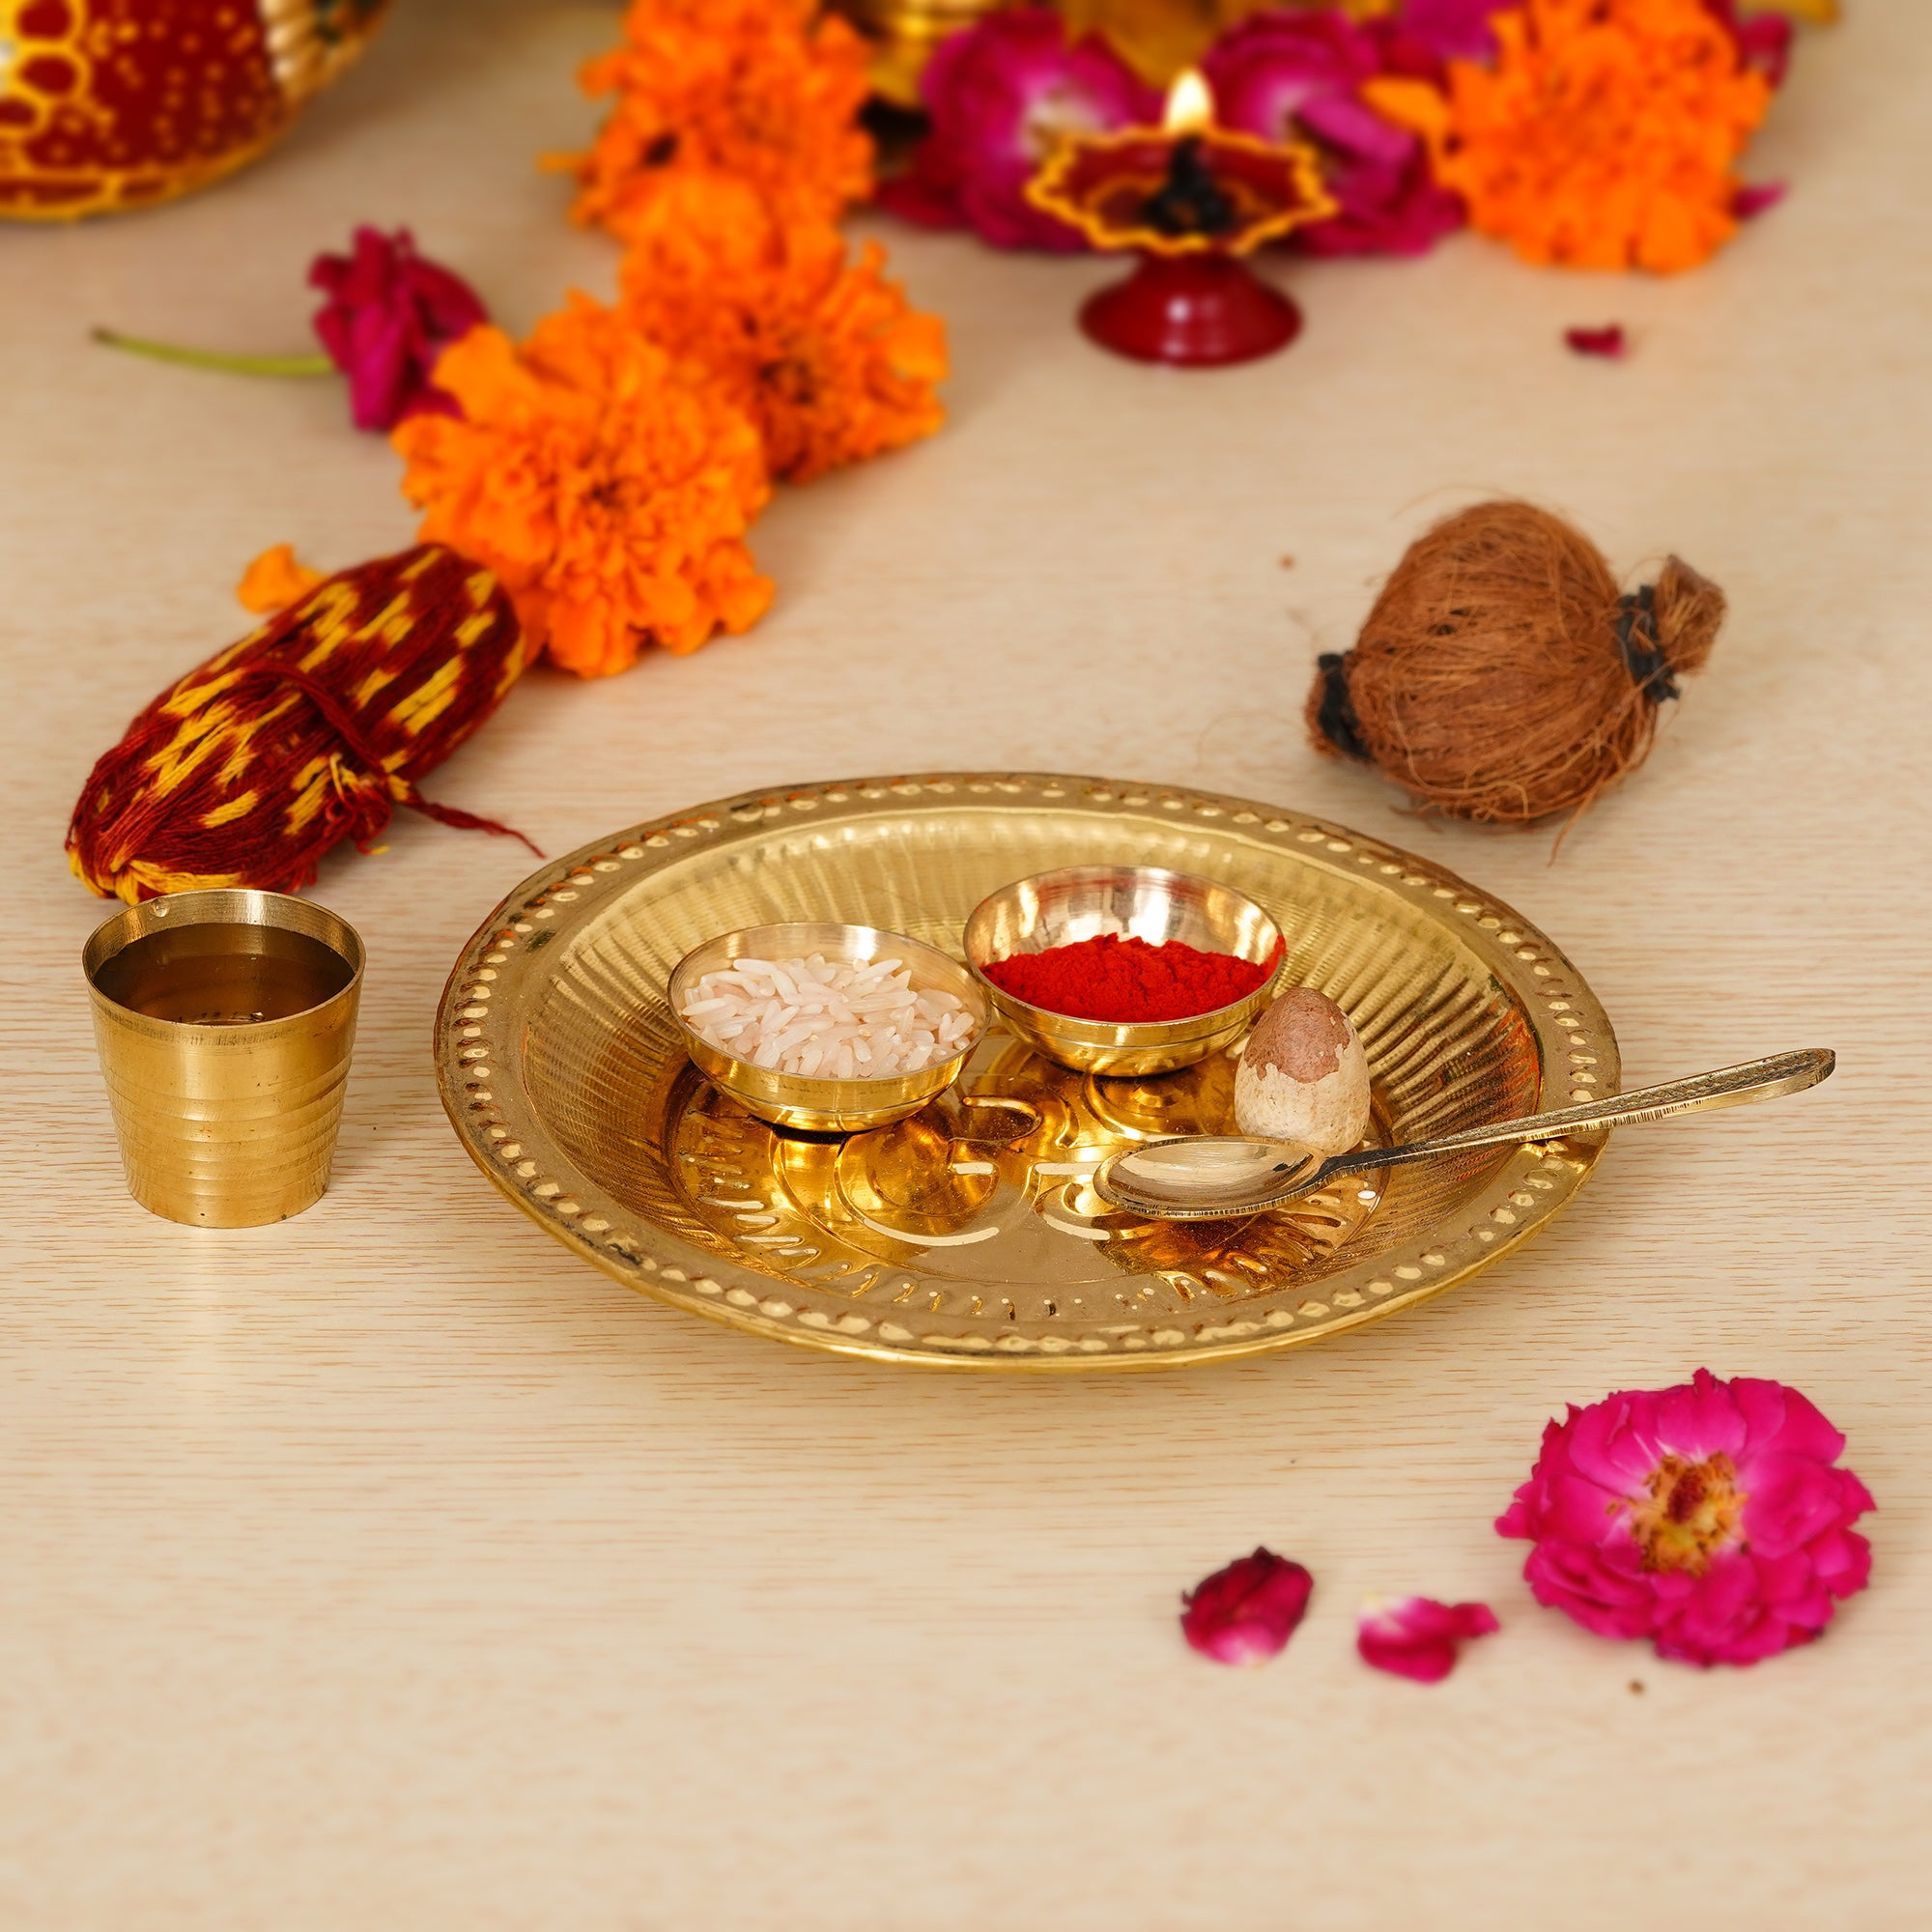 6 Inch Brass Pooja Thali with 2 Katori/Bowls, 1 Spoon and 1 Glass